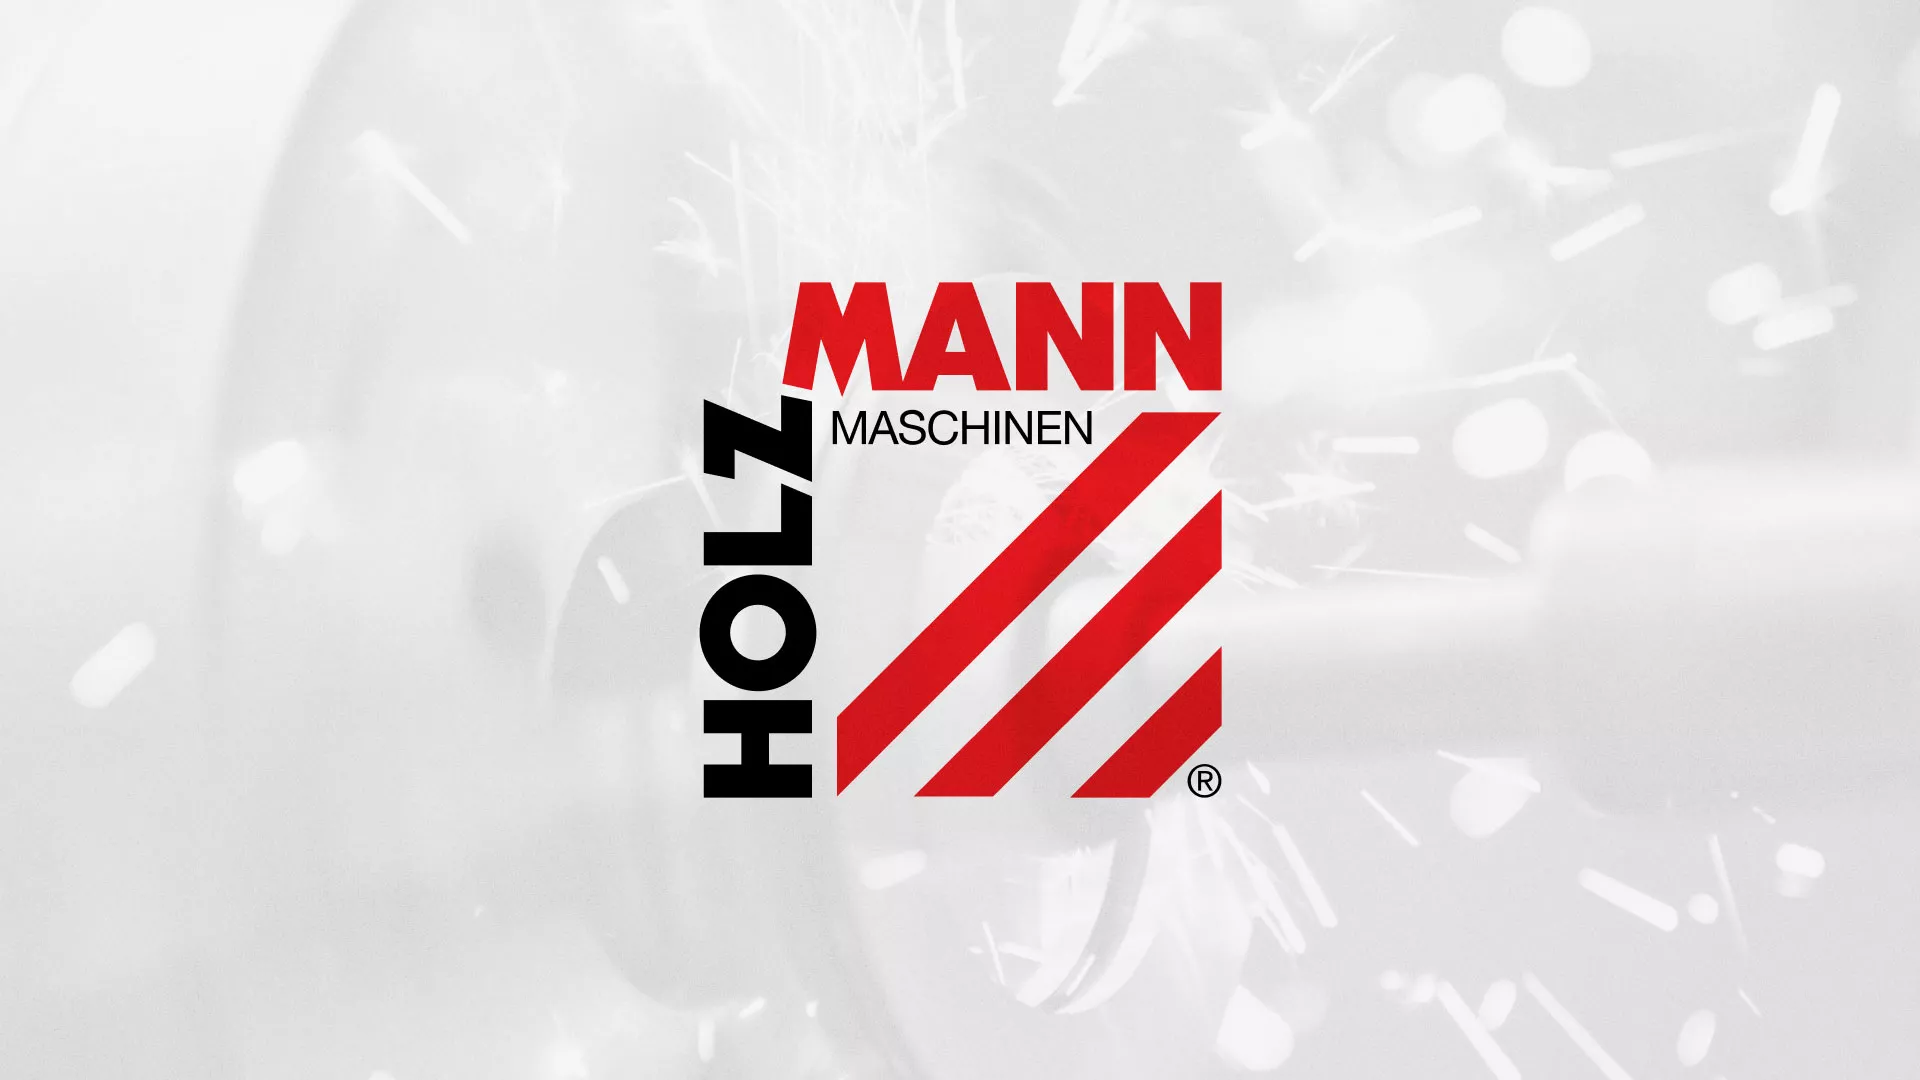 Создание сайта компании «HOLZMANN Maschinen GmbH» в Злынке